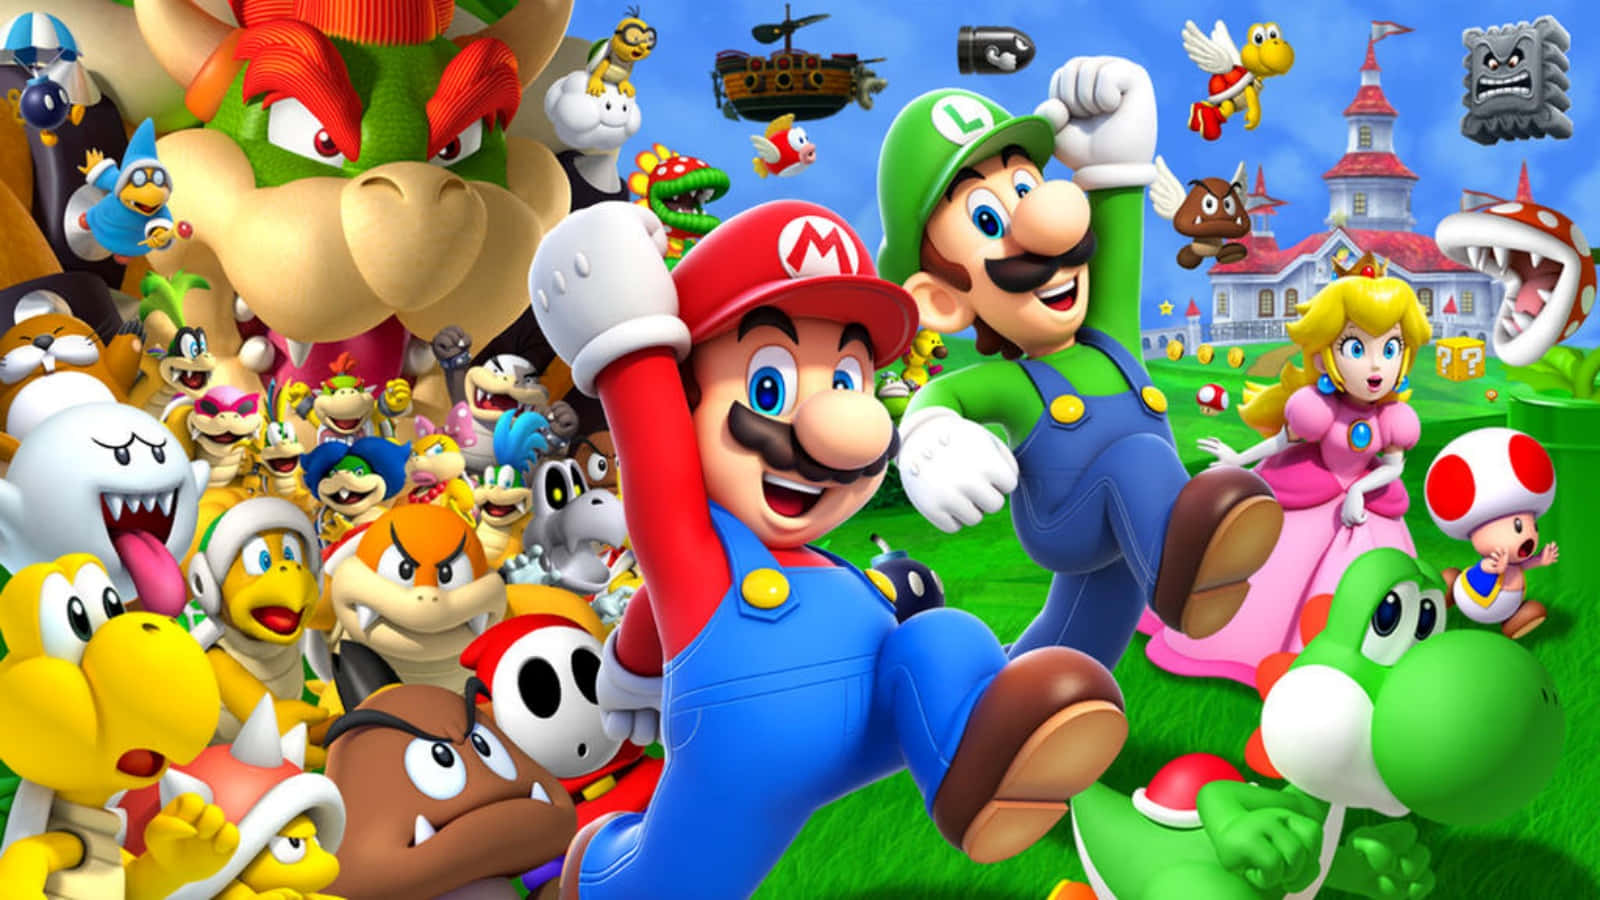 Super Mario Characters Assembled for Adventure Wallpaper